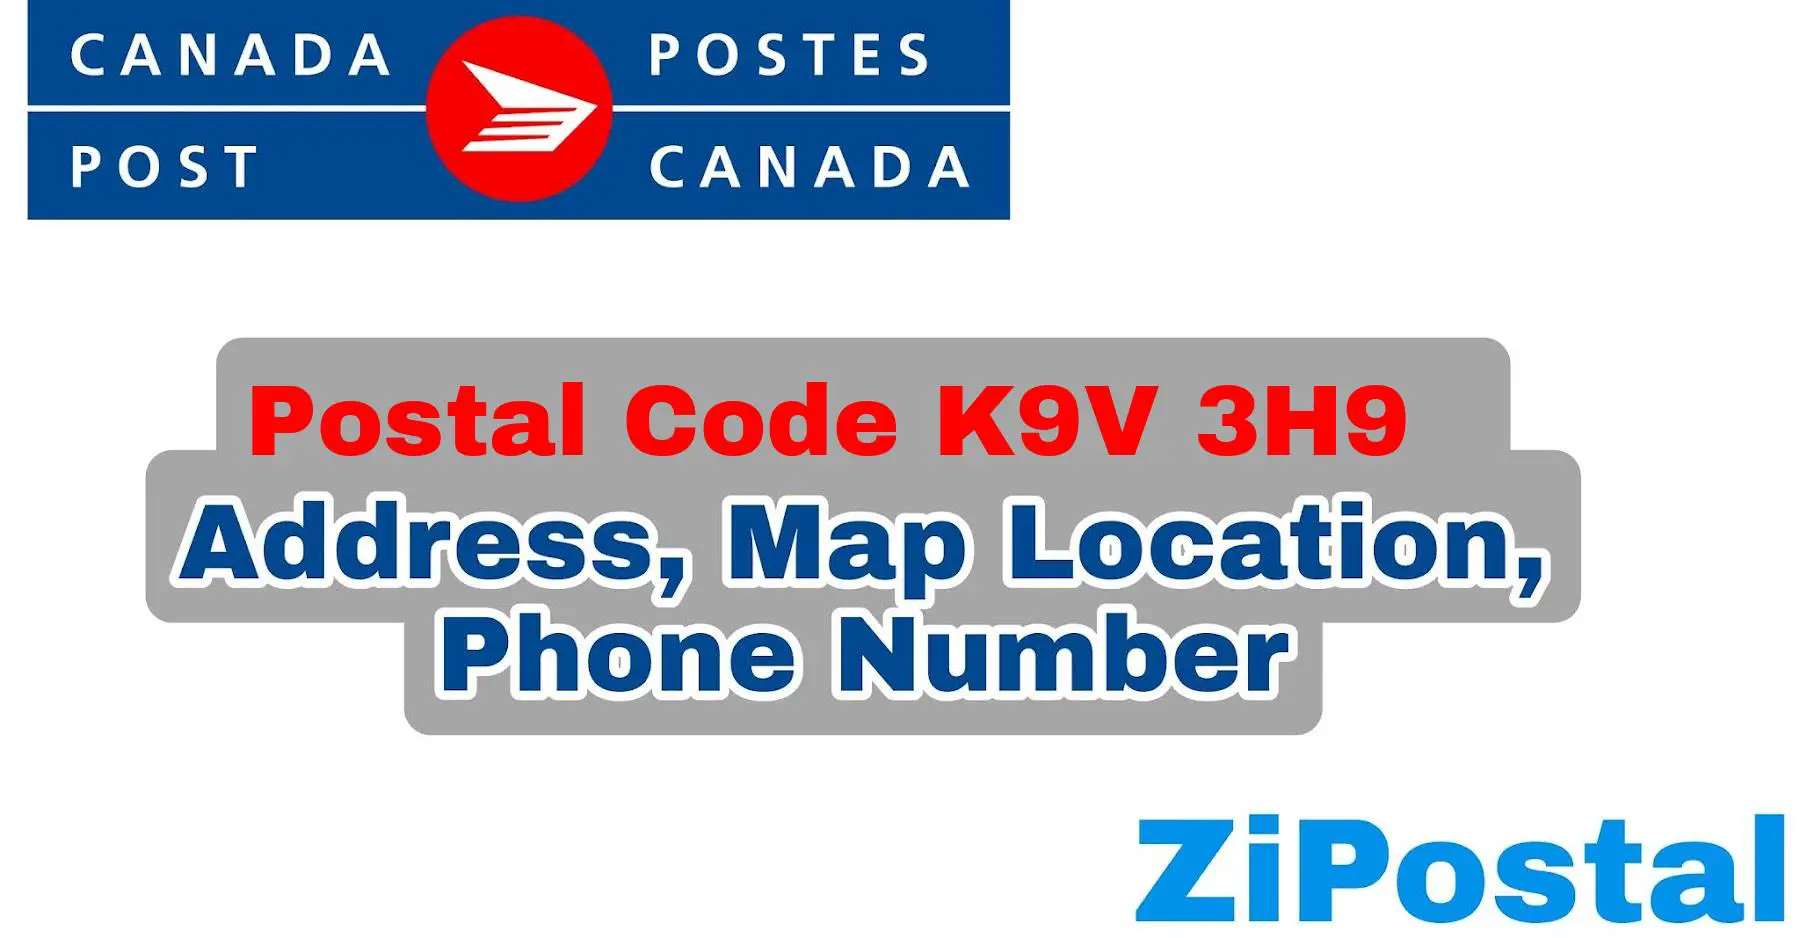 Postal Code K9V 3H9 Address Map Location and Phone Number